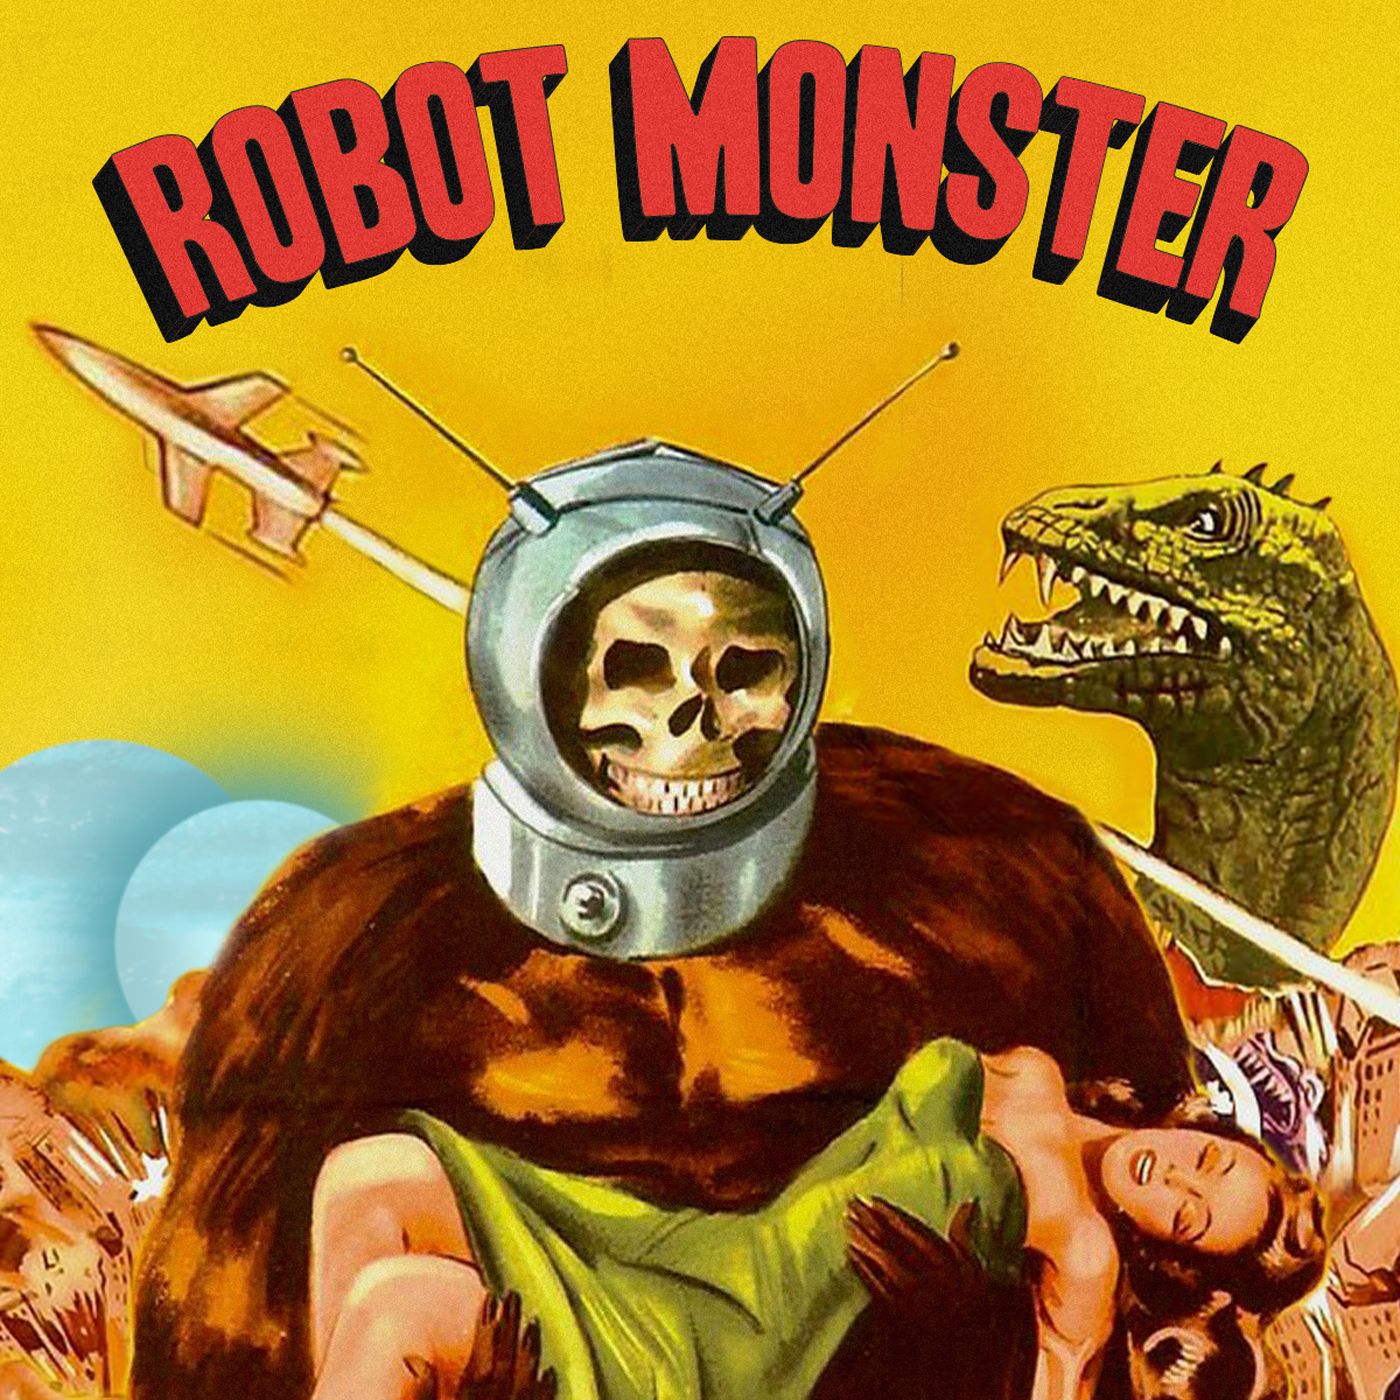 Episode 695: Robot Monster (1953)